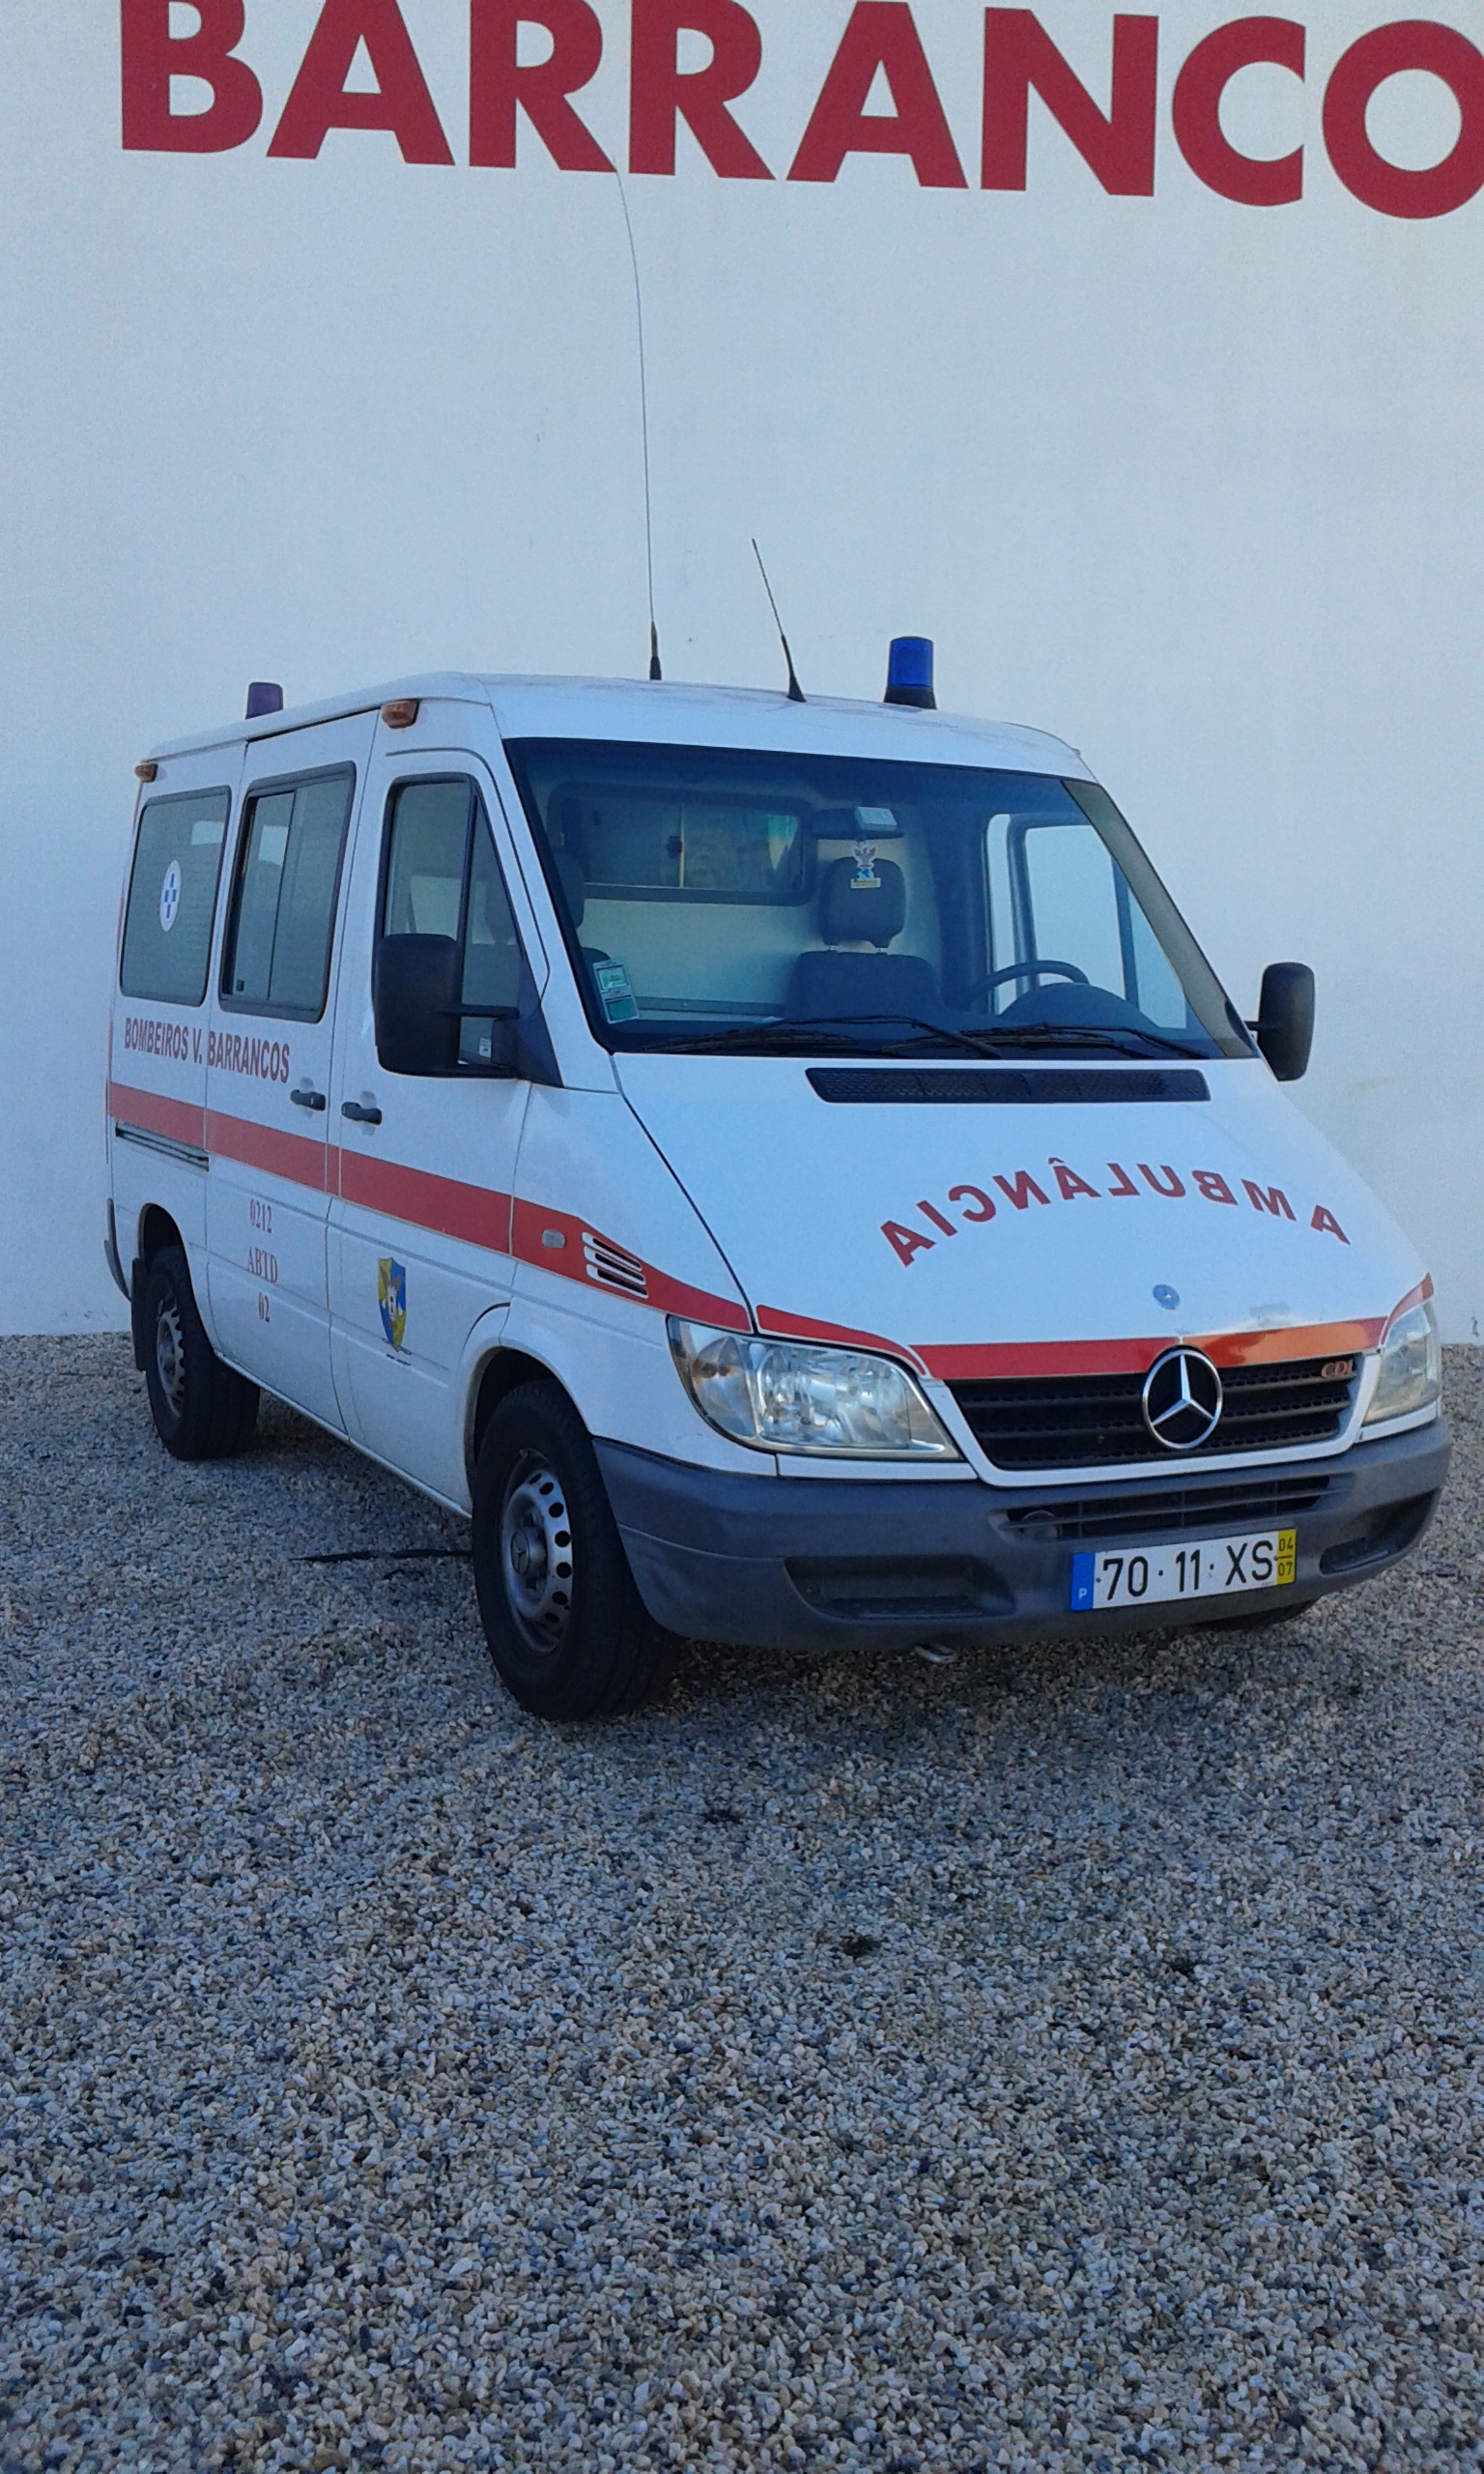 ABTD 02 - Ambulância de Transporte de Doentes - Tipo A1